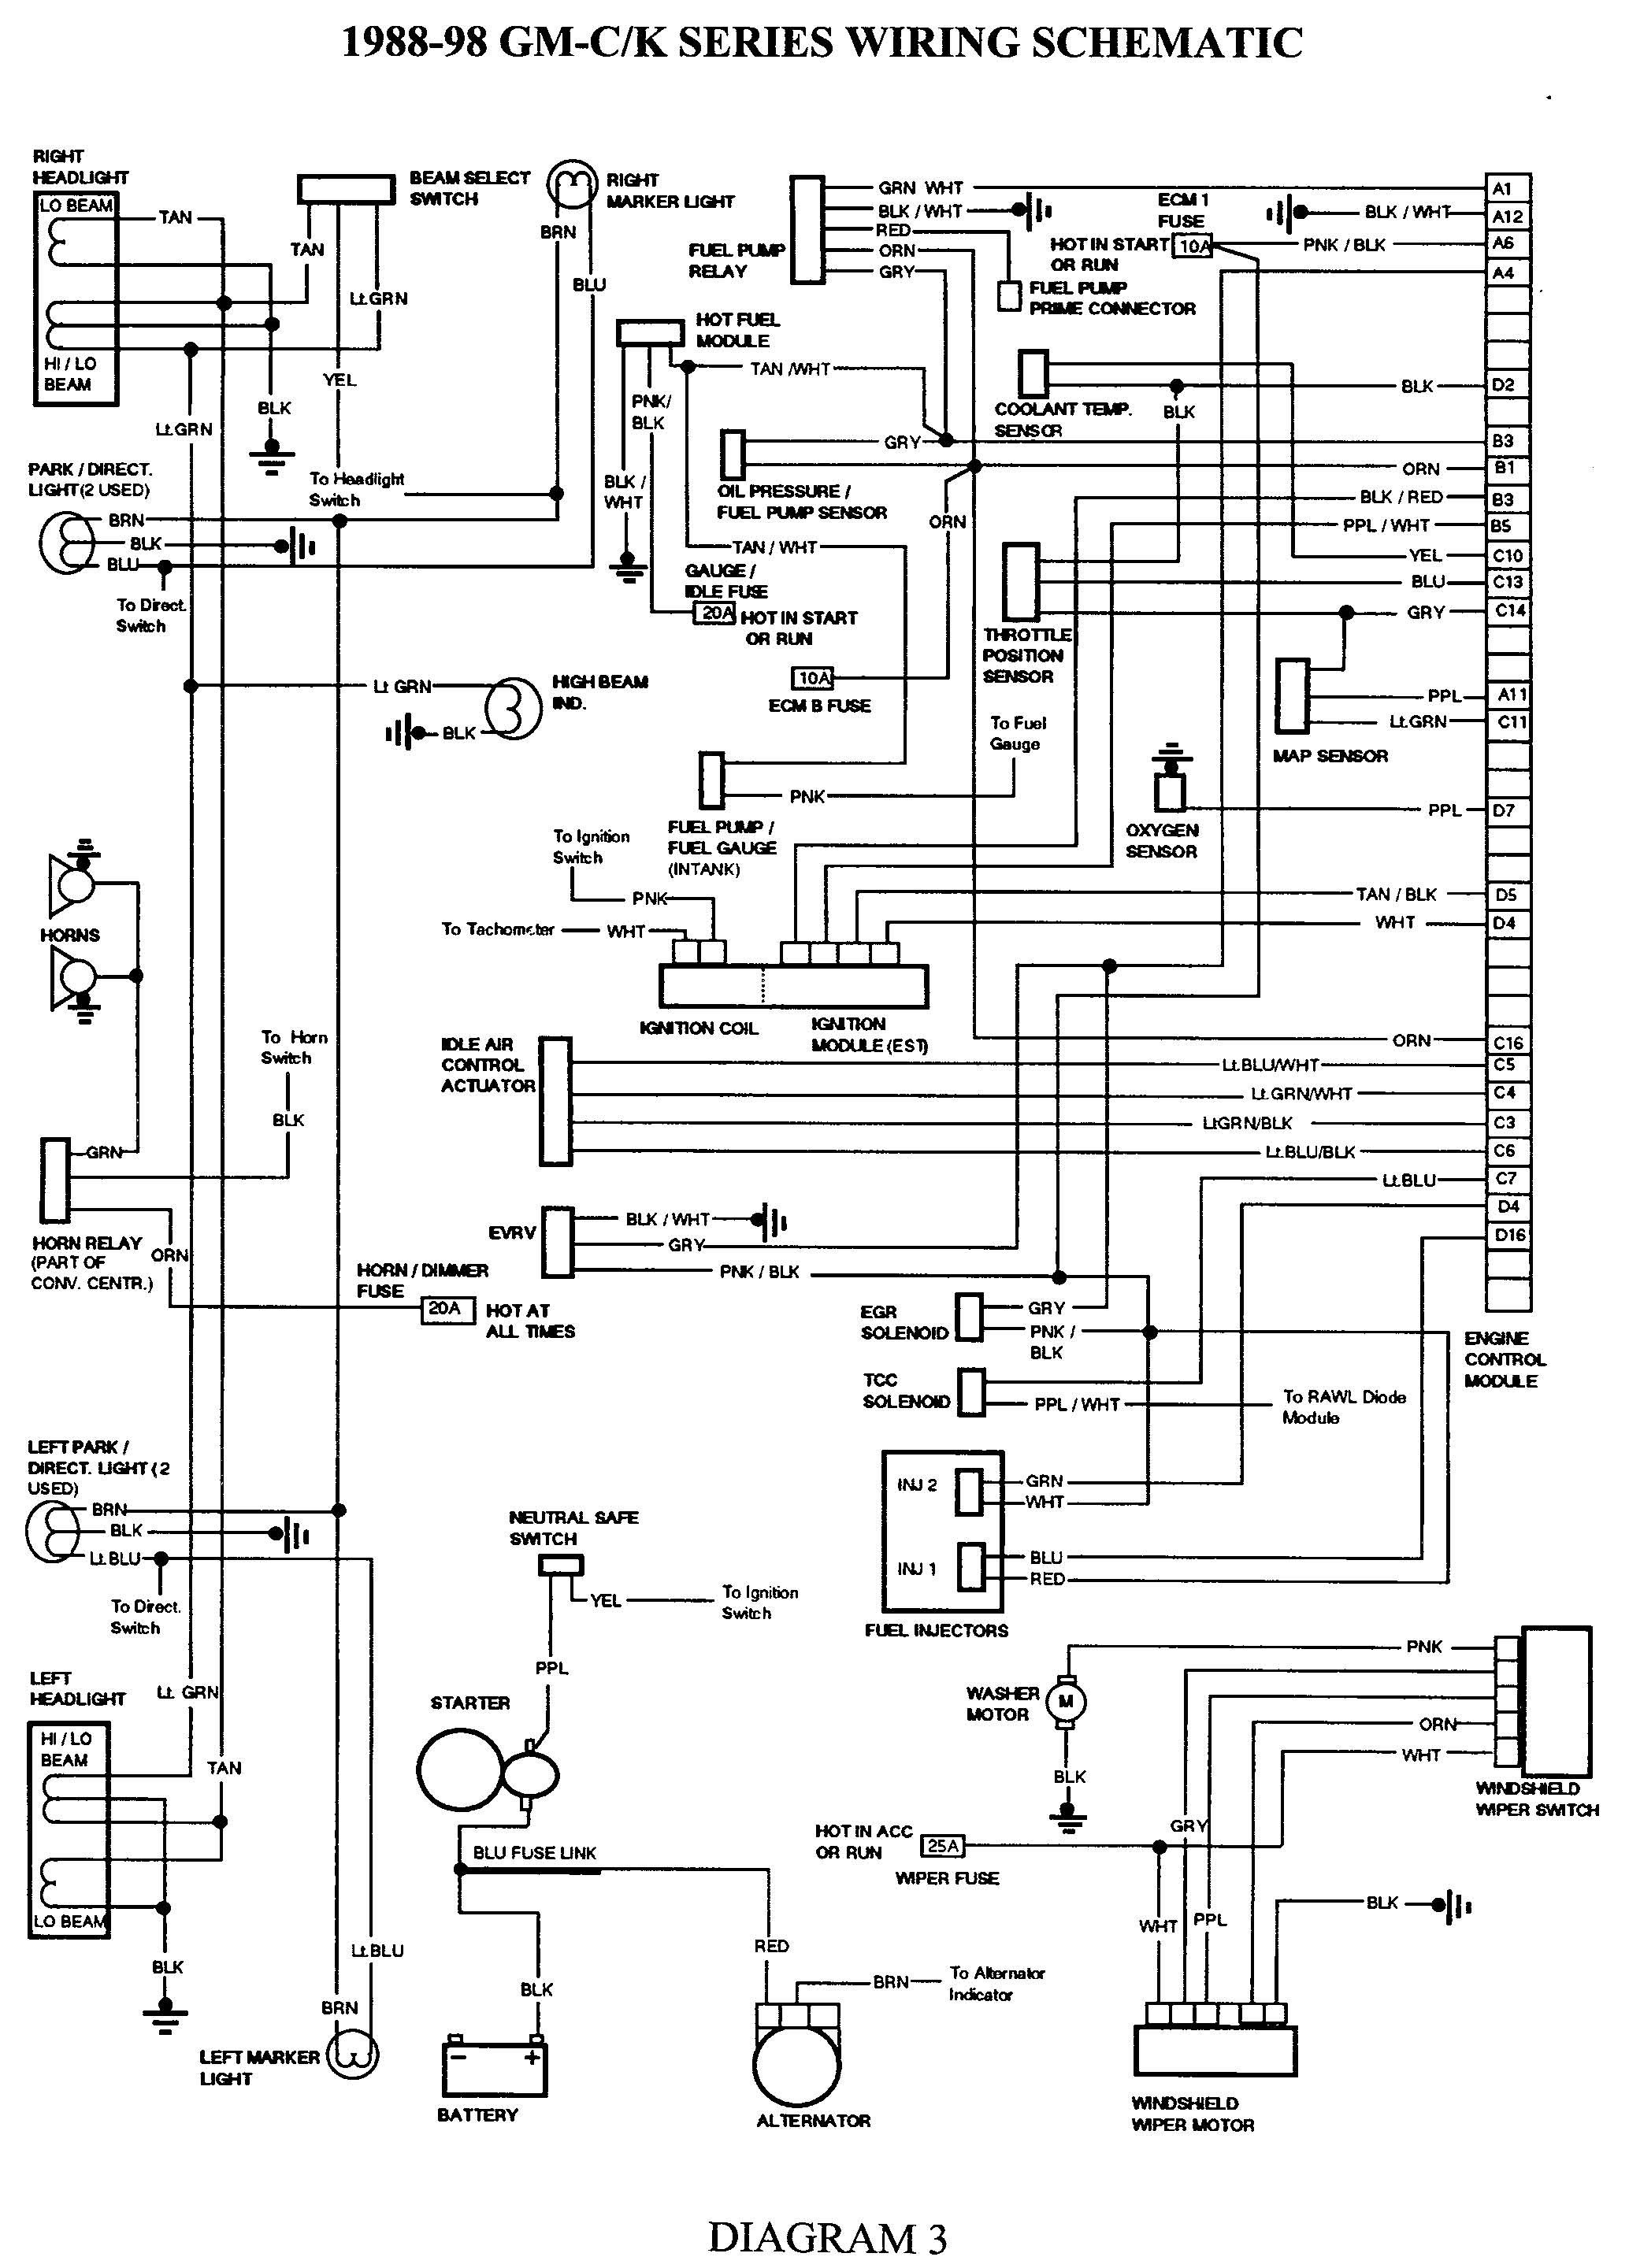 Kohler Command Wiring Diagram from detoxicrecenze.com